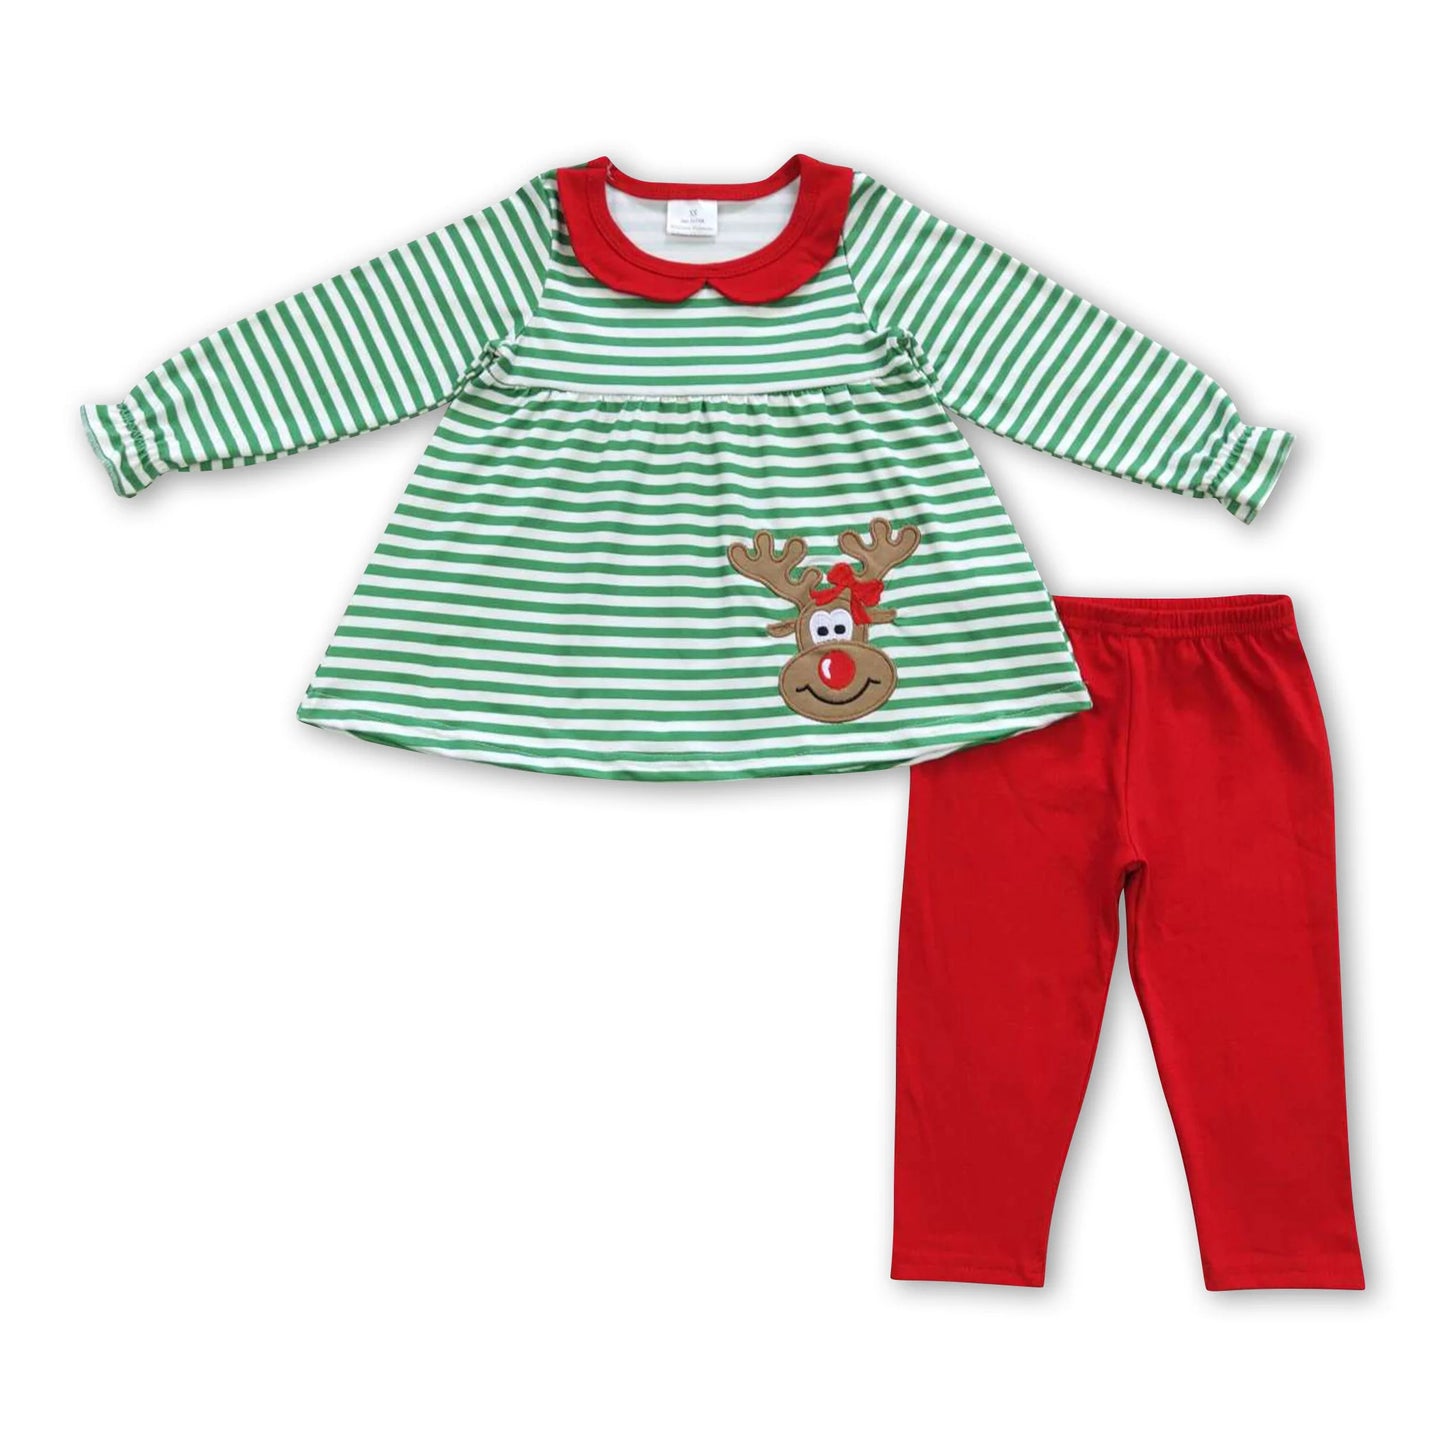 ᴡᴇᴇᴋʟʏ ᴘʀᴇ ᴏʀᴅᴇʀ Christmas Embroidered Reindeer Stripes Girls Set